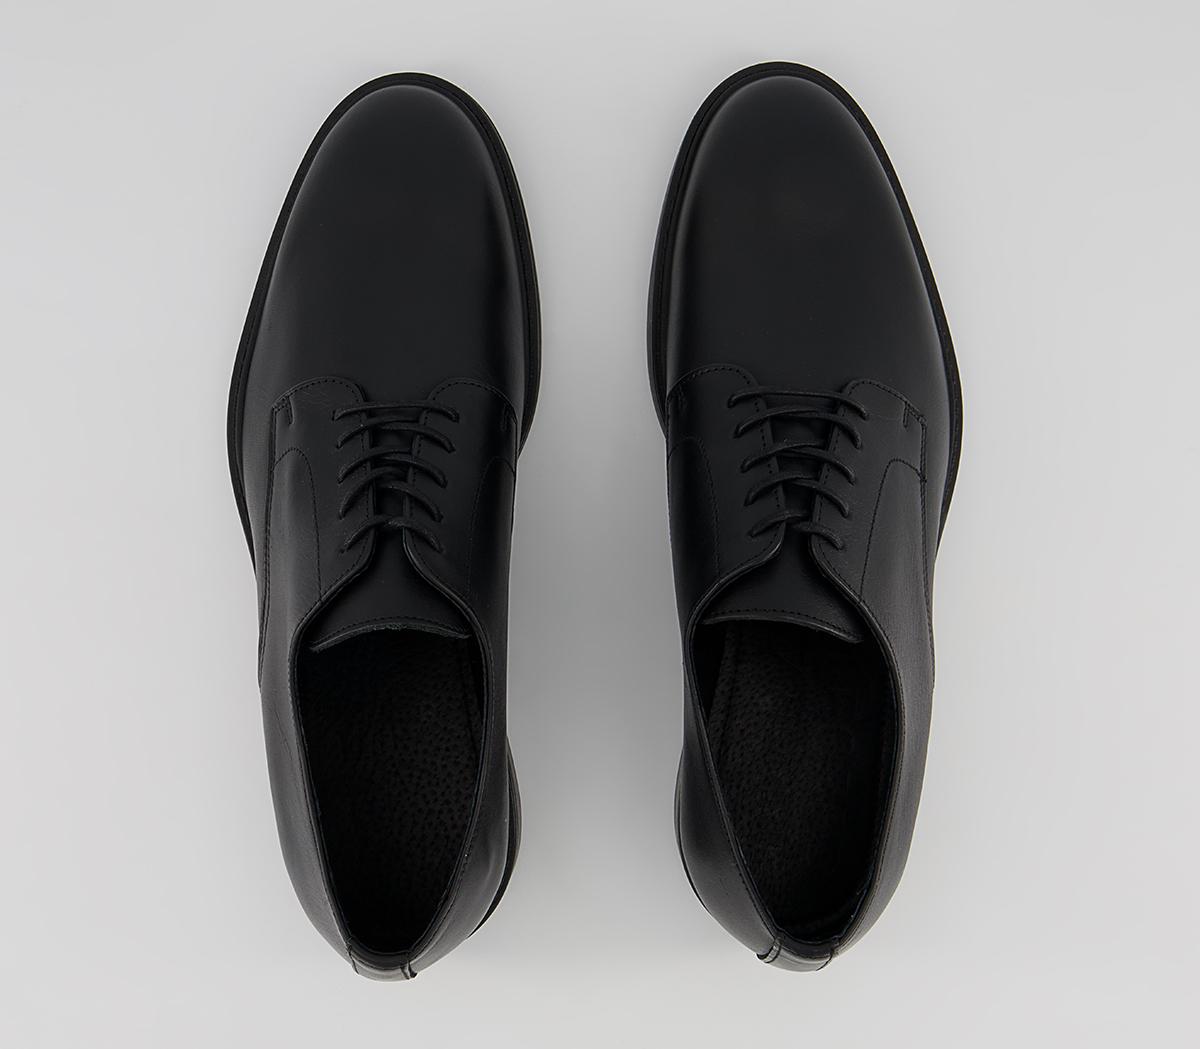 Selected Homme Blake Derby Shoes Black Leather - Men’s Smart Shoes